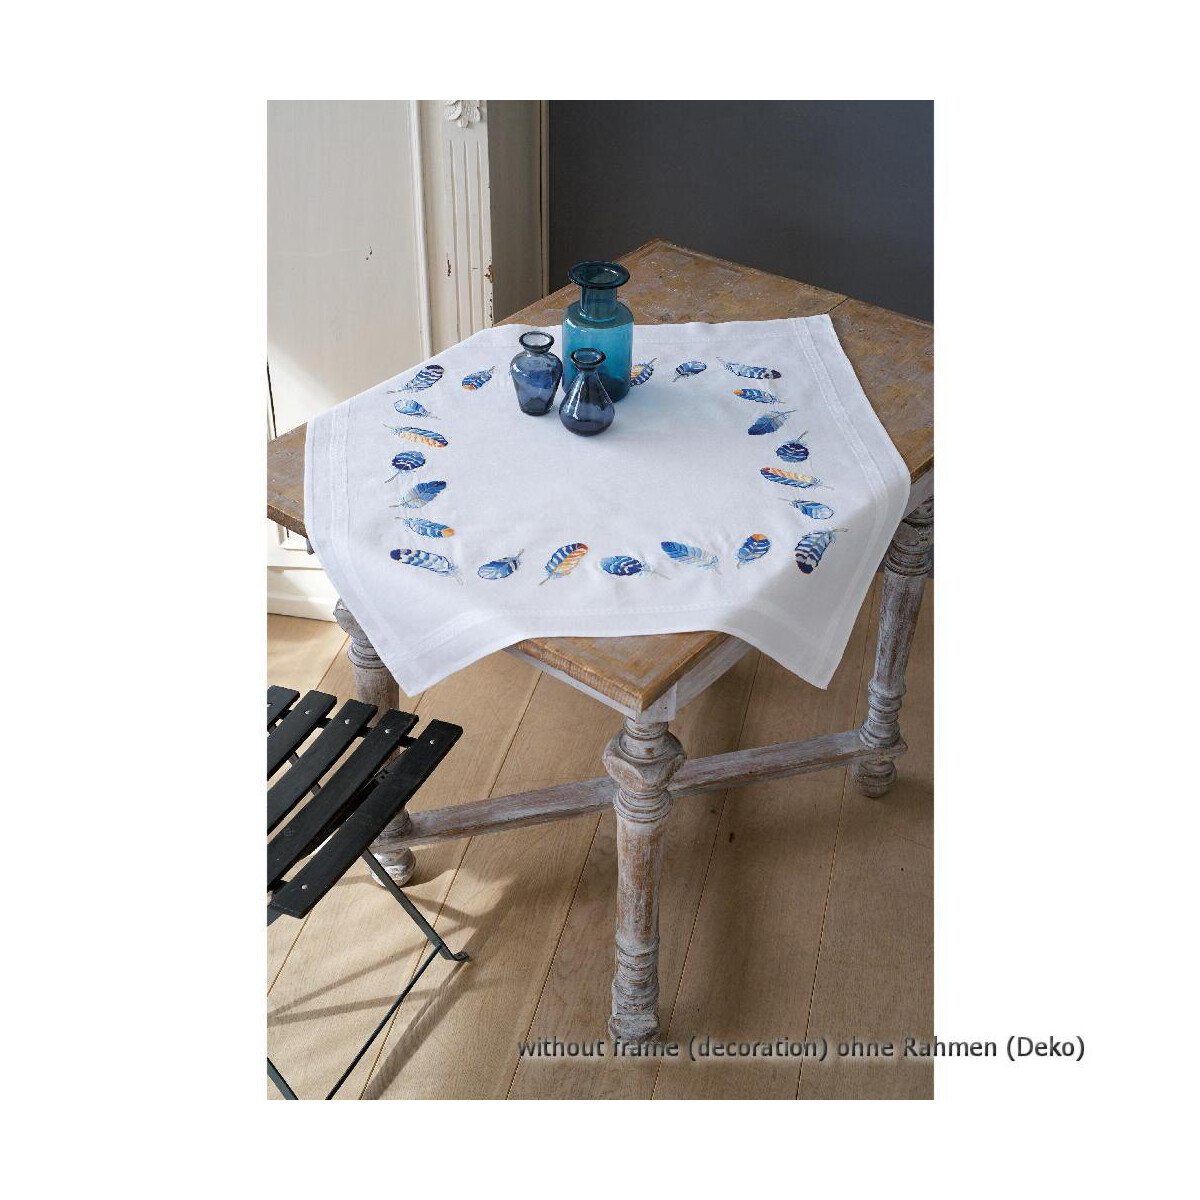 Vervaco Bedrukte tafelkleed borduurset "Blauwe...